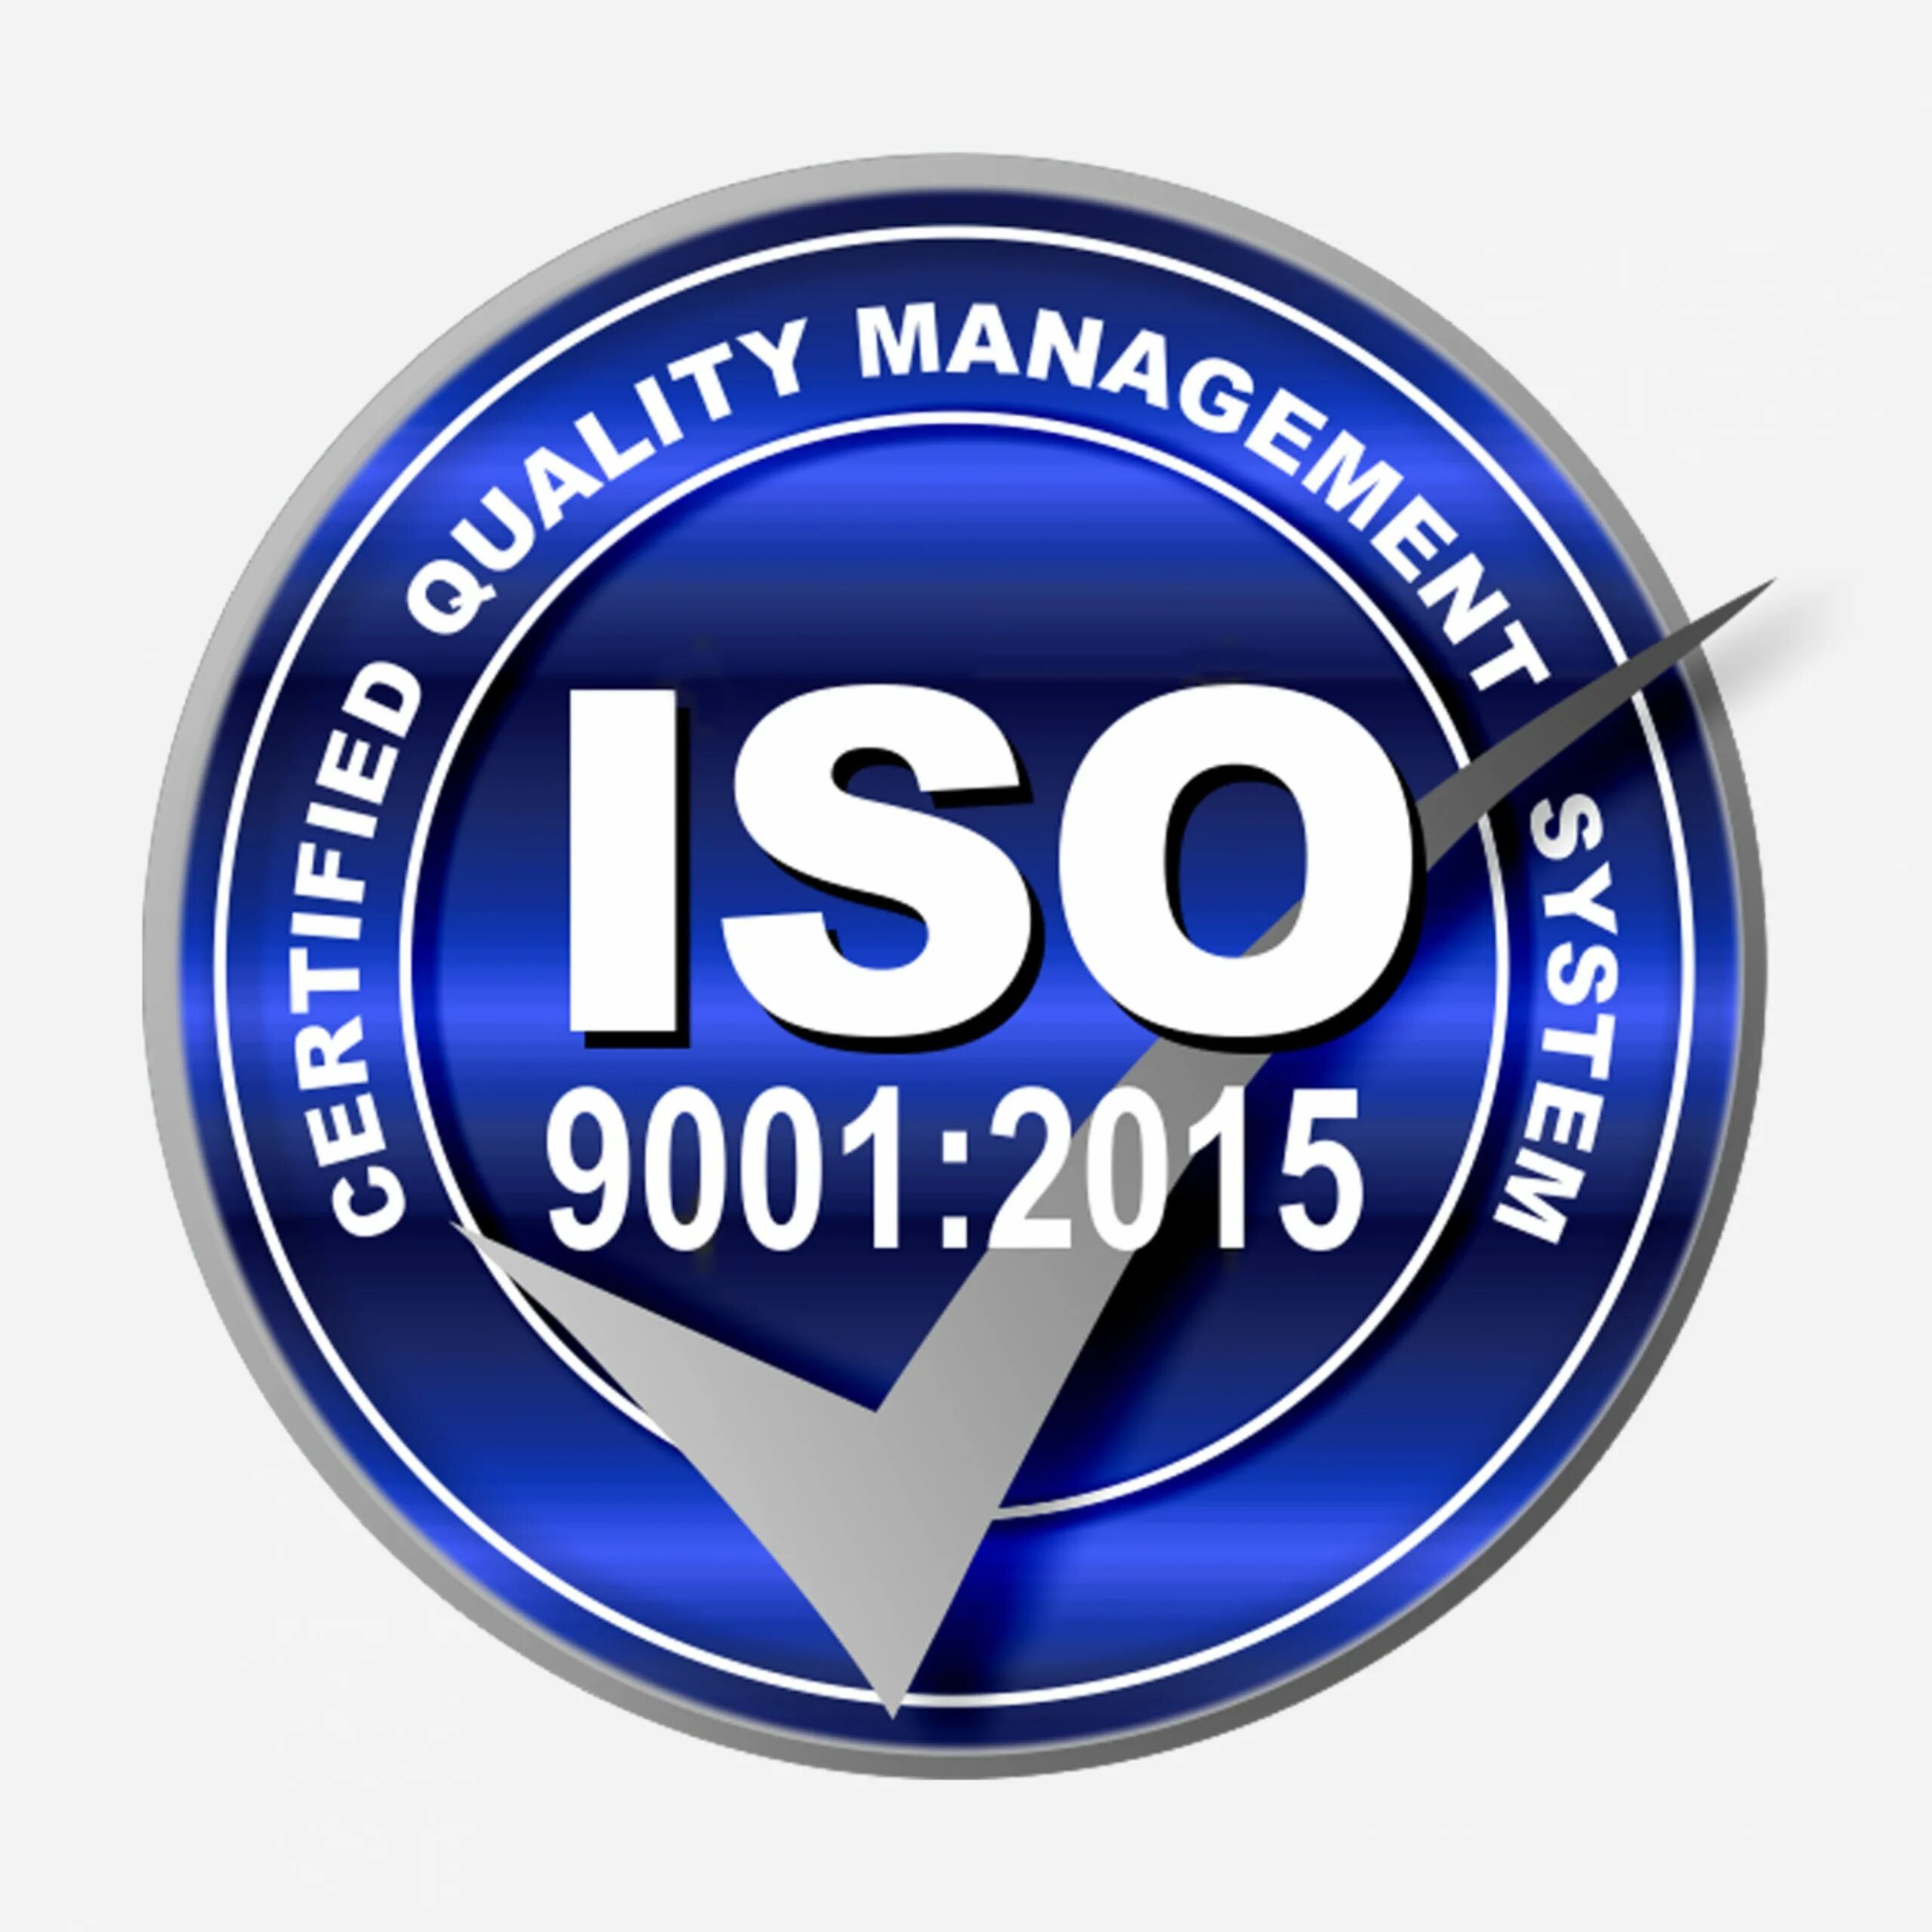 Сертификат ISO 9001:2015 лого. Международный стандарт качества ISO 9001. ISO 9000 логотип. Стандарт ИСО 9001 2015.